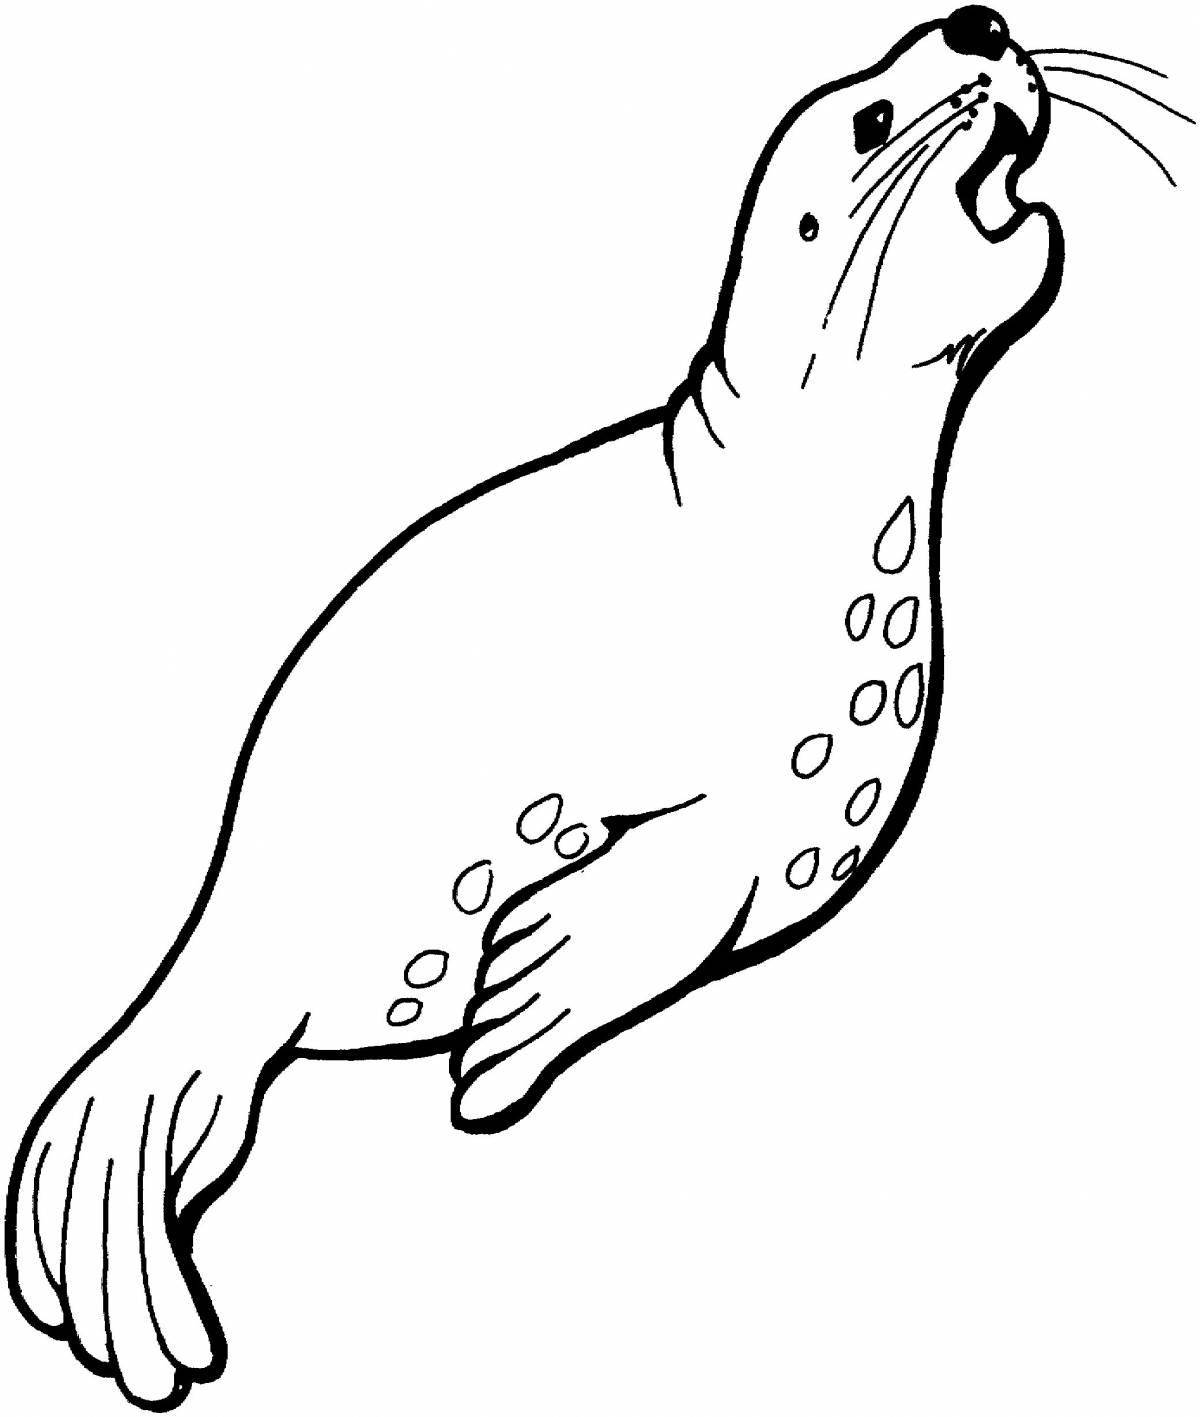 Majestic sea lion coloring page